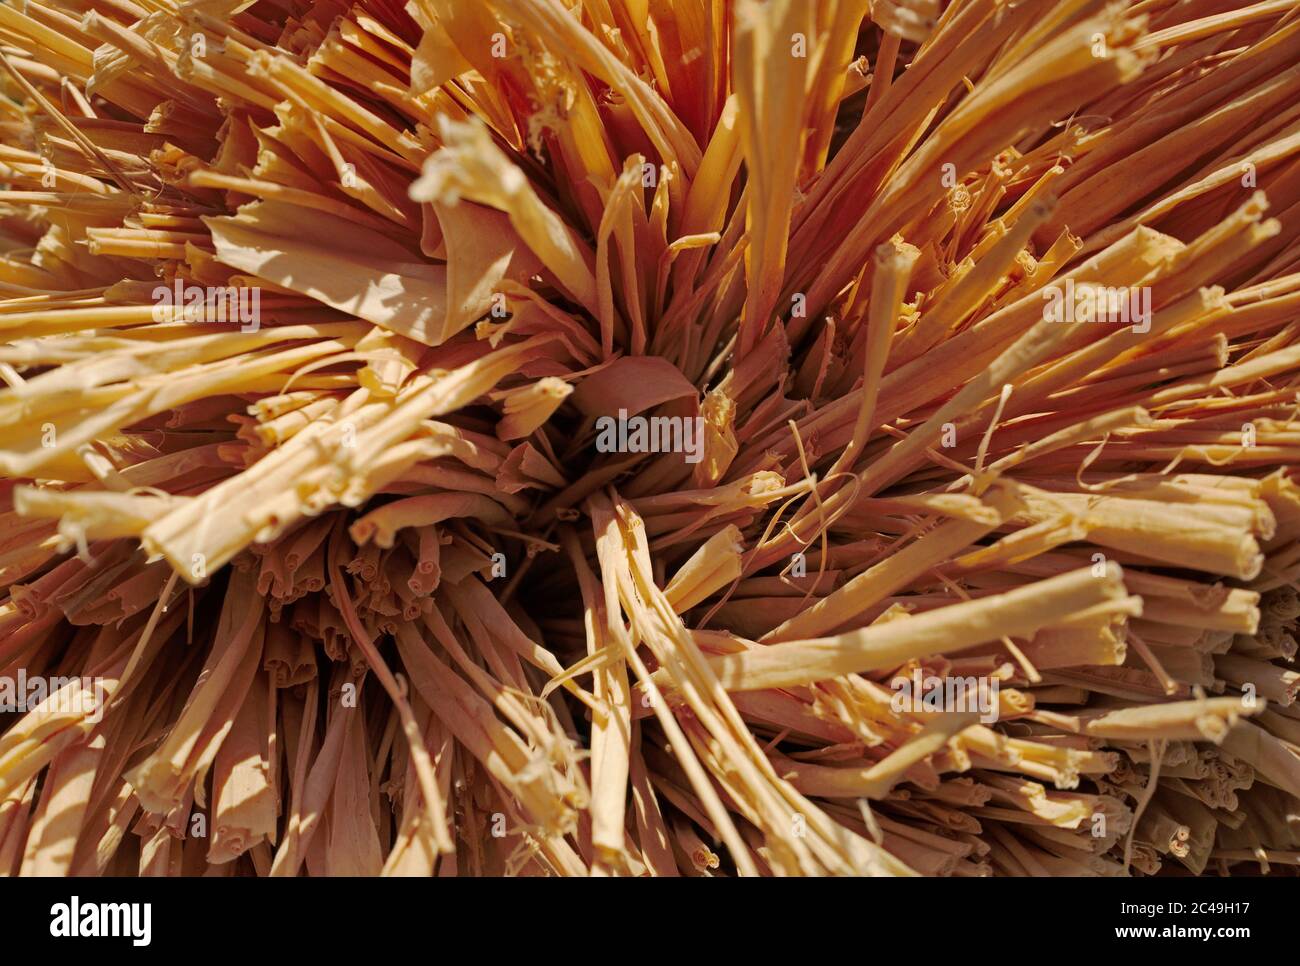 Tangled rafia palm fibers texture background Stock Photo